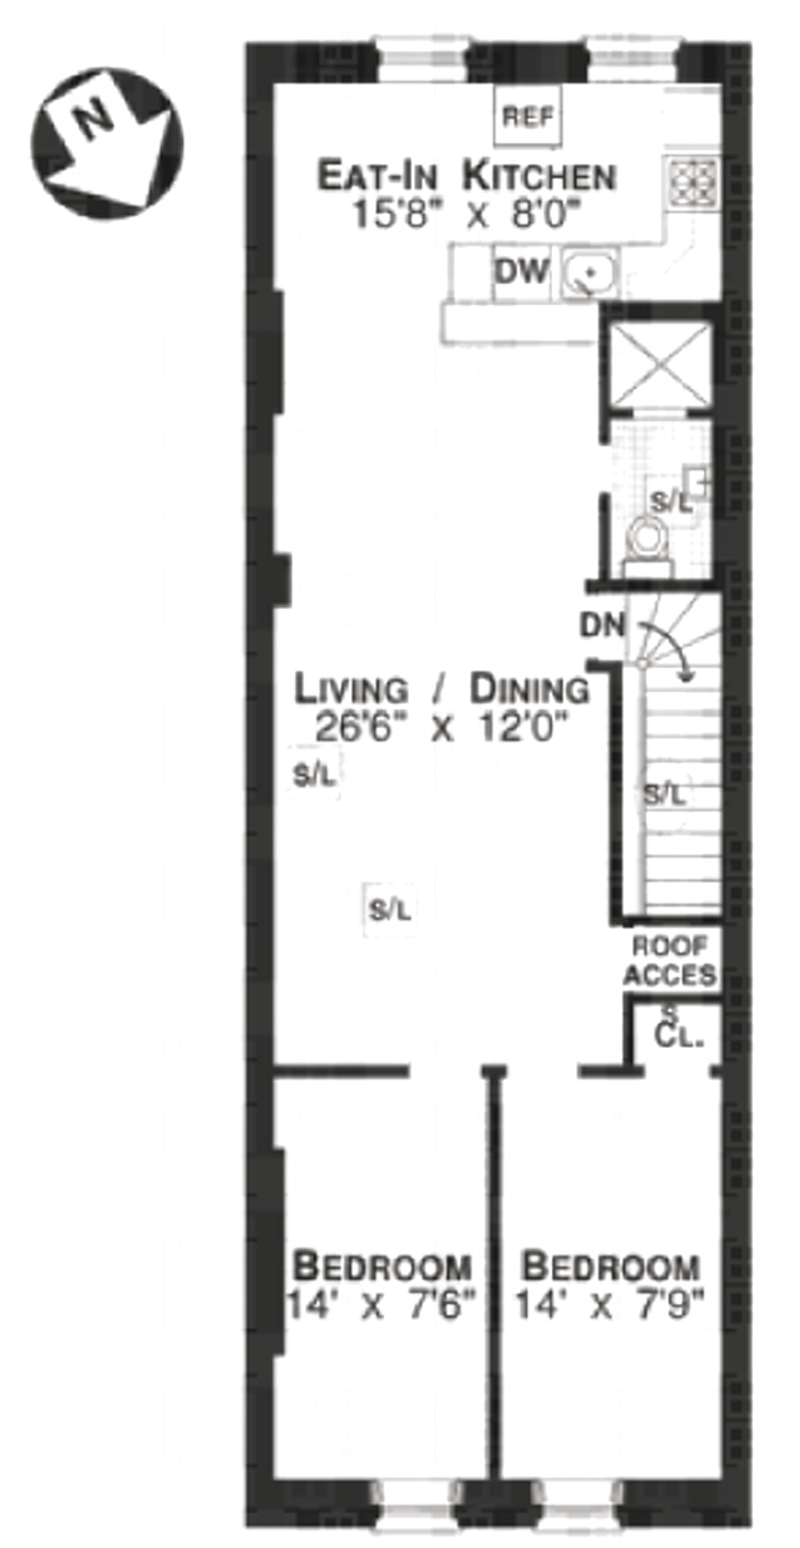 Floorplan for 312 West 115th Street